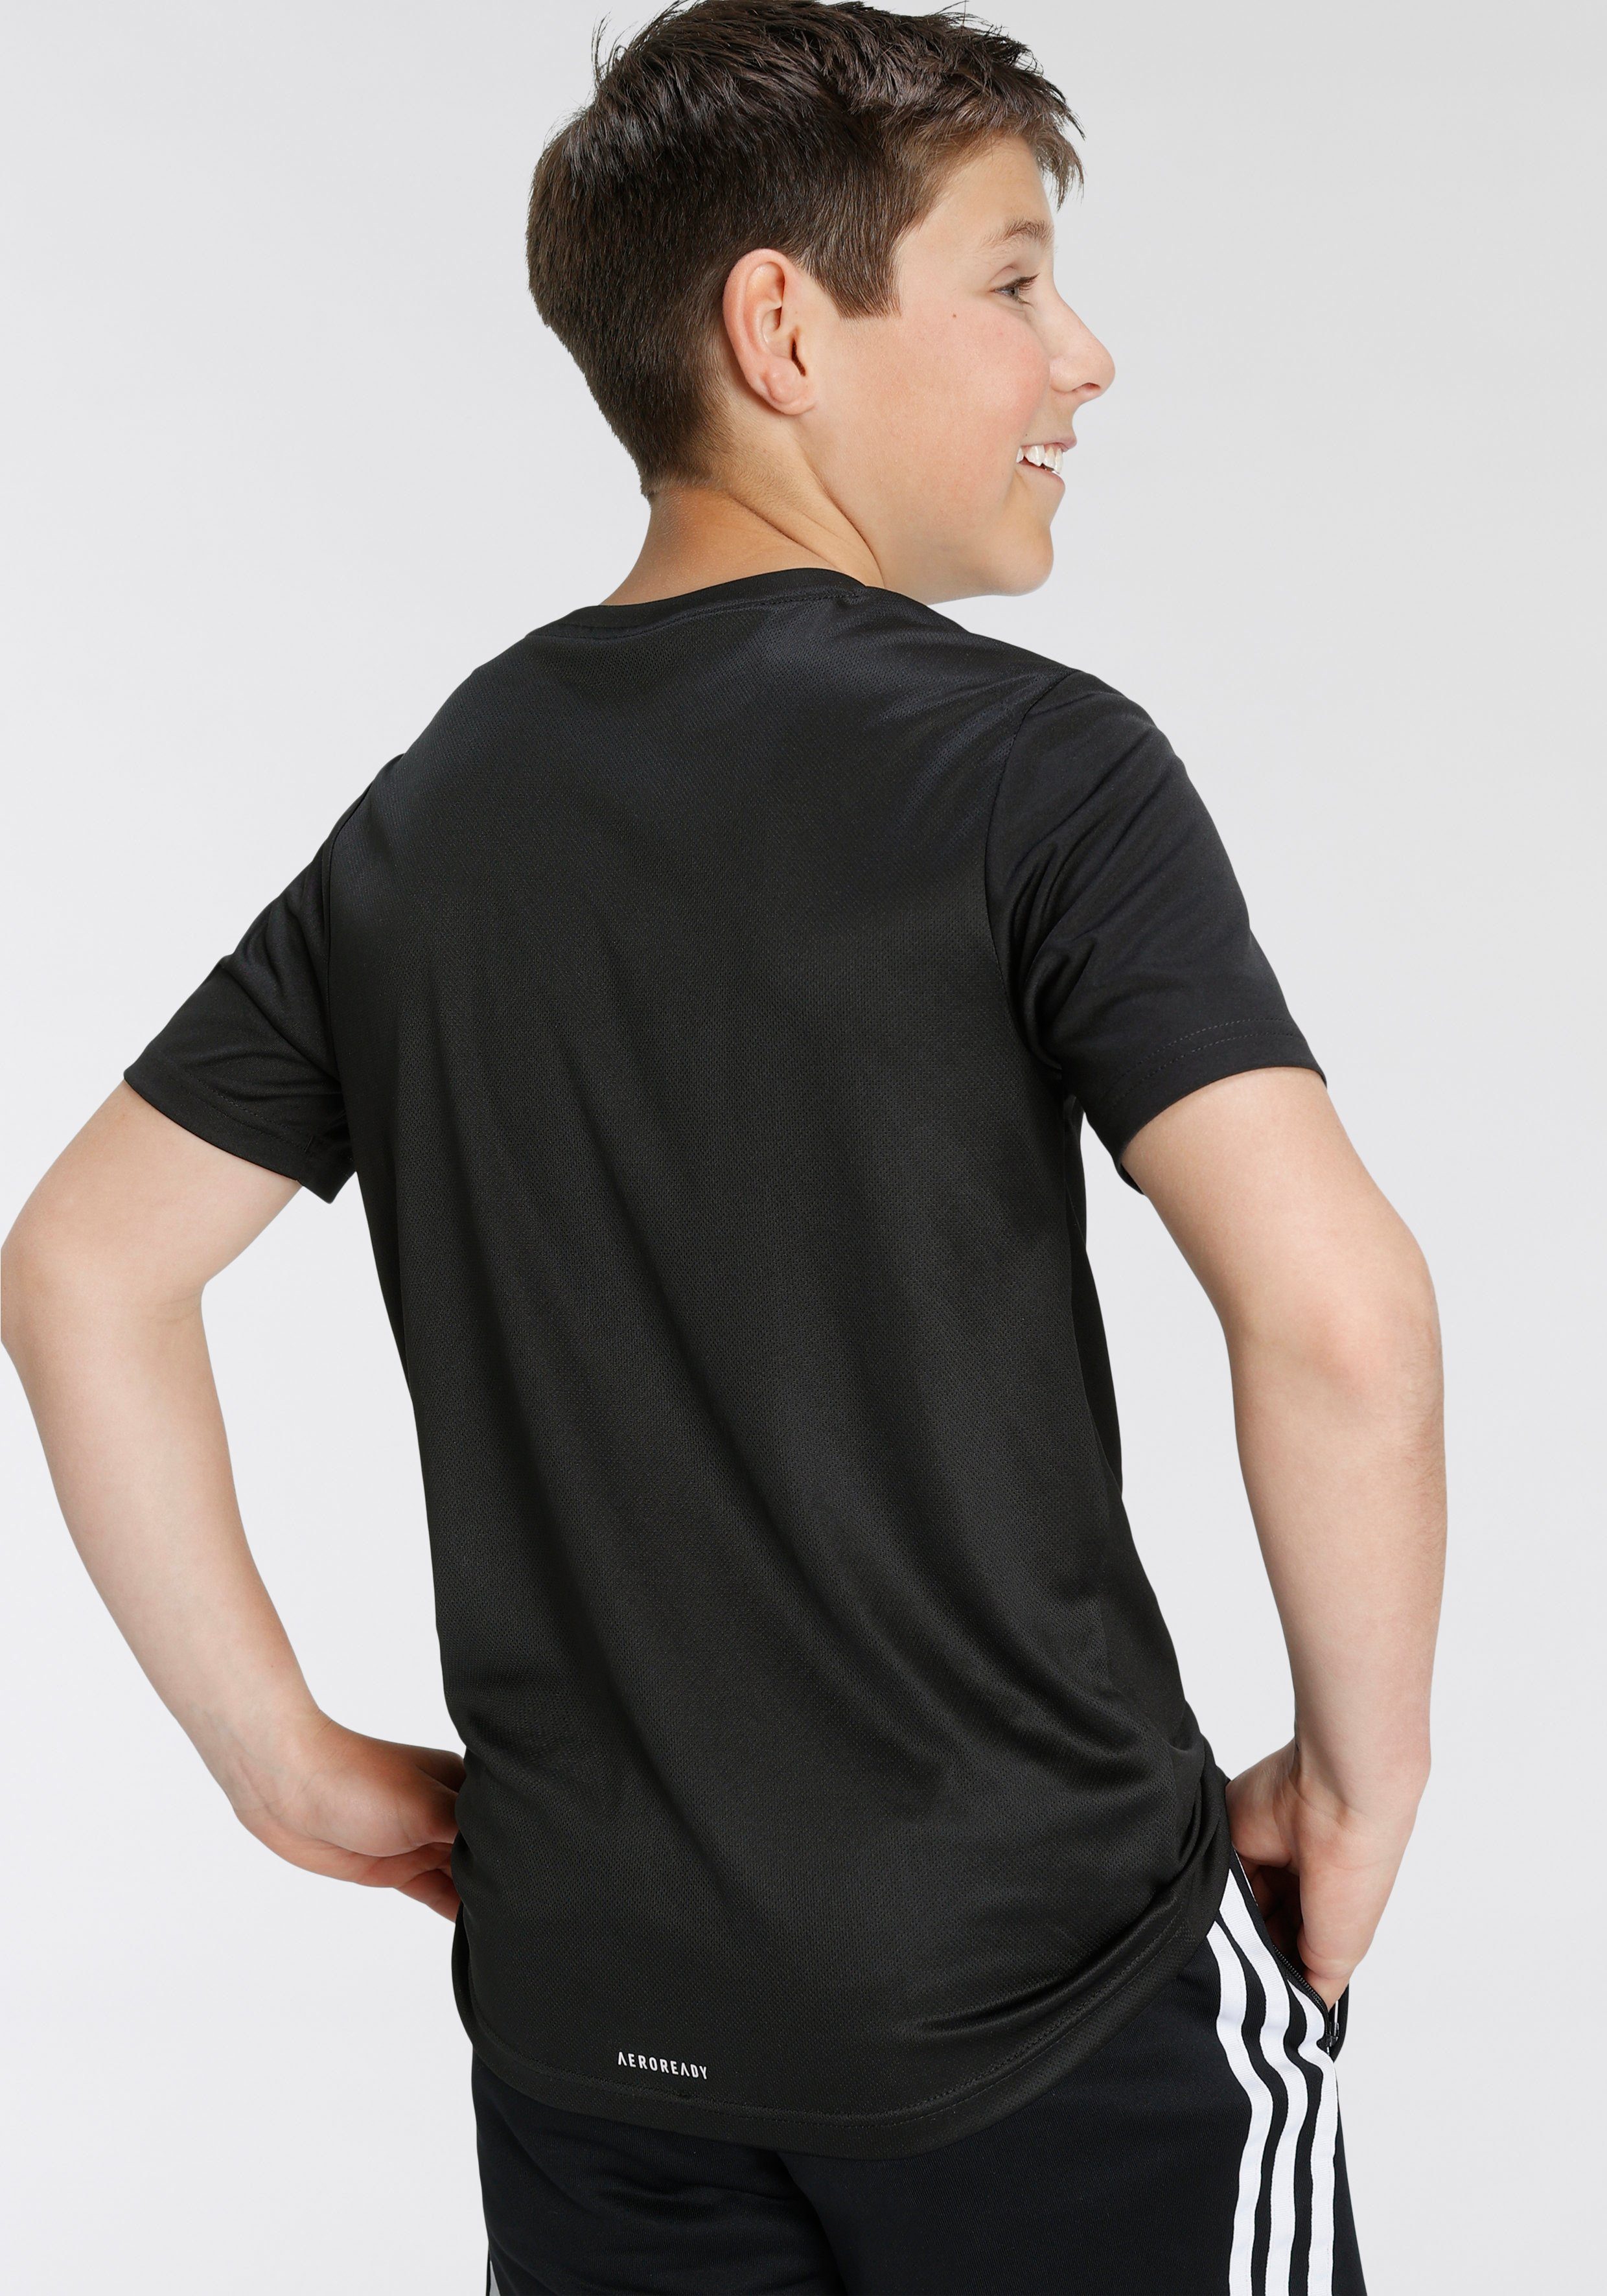 adidas Sportswear T-Shirt ADIDAS LOGO BLACK/WHITE TO DESIGNED MOVE BIG